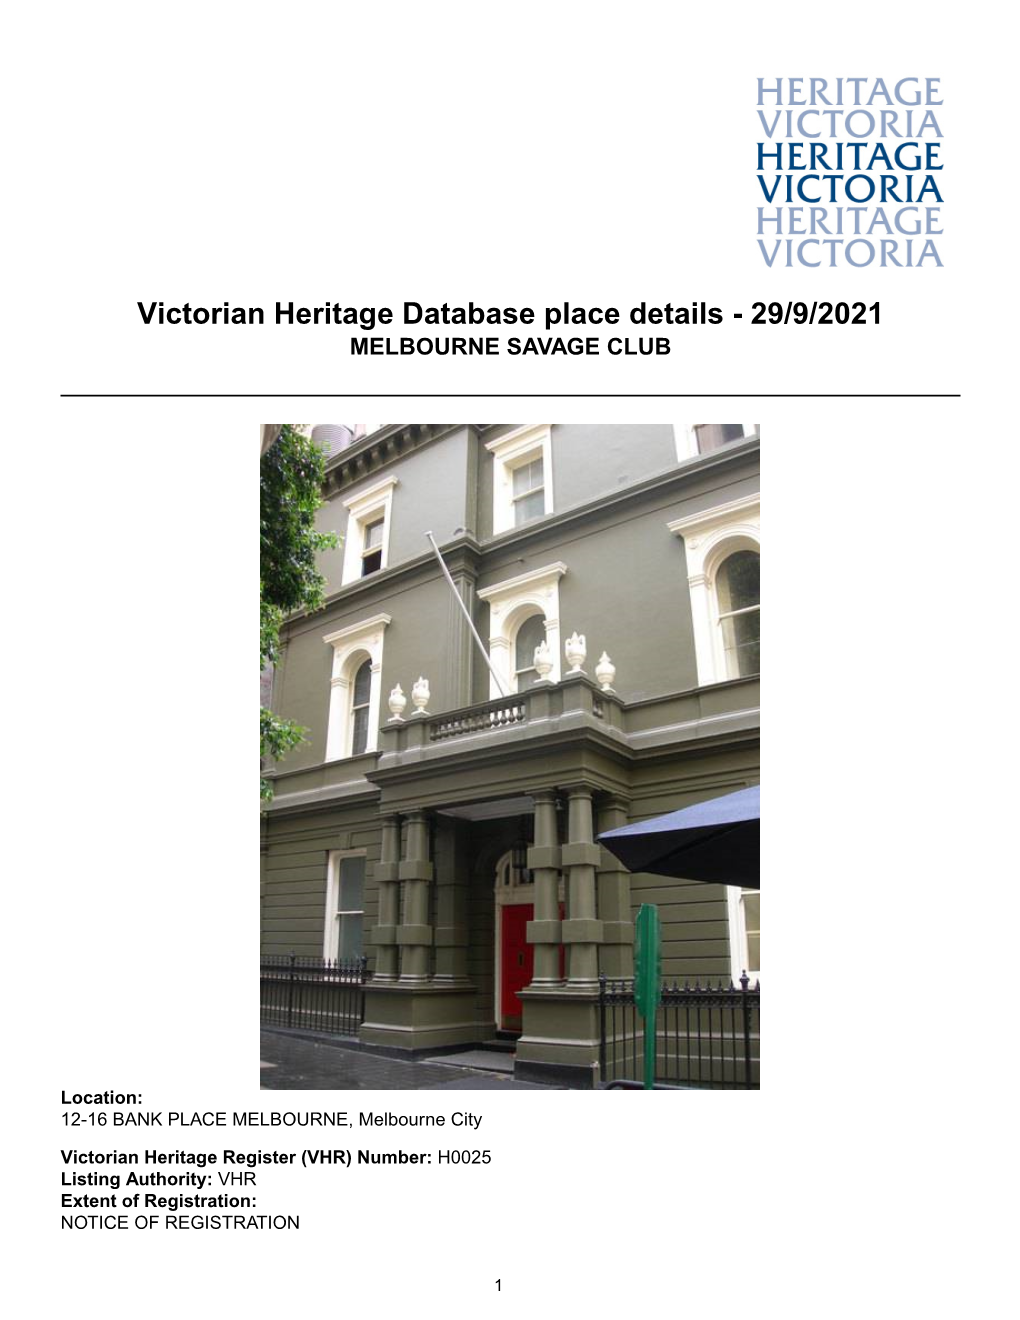 Victorian Heritage Database Place Details - 29/9/2021 MELBOURNE SAVAGE CLUB